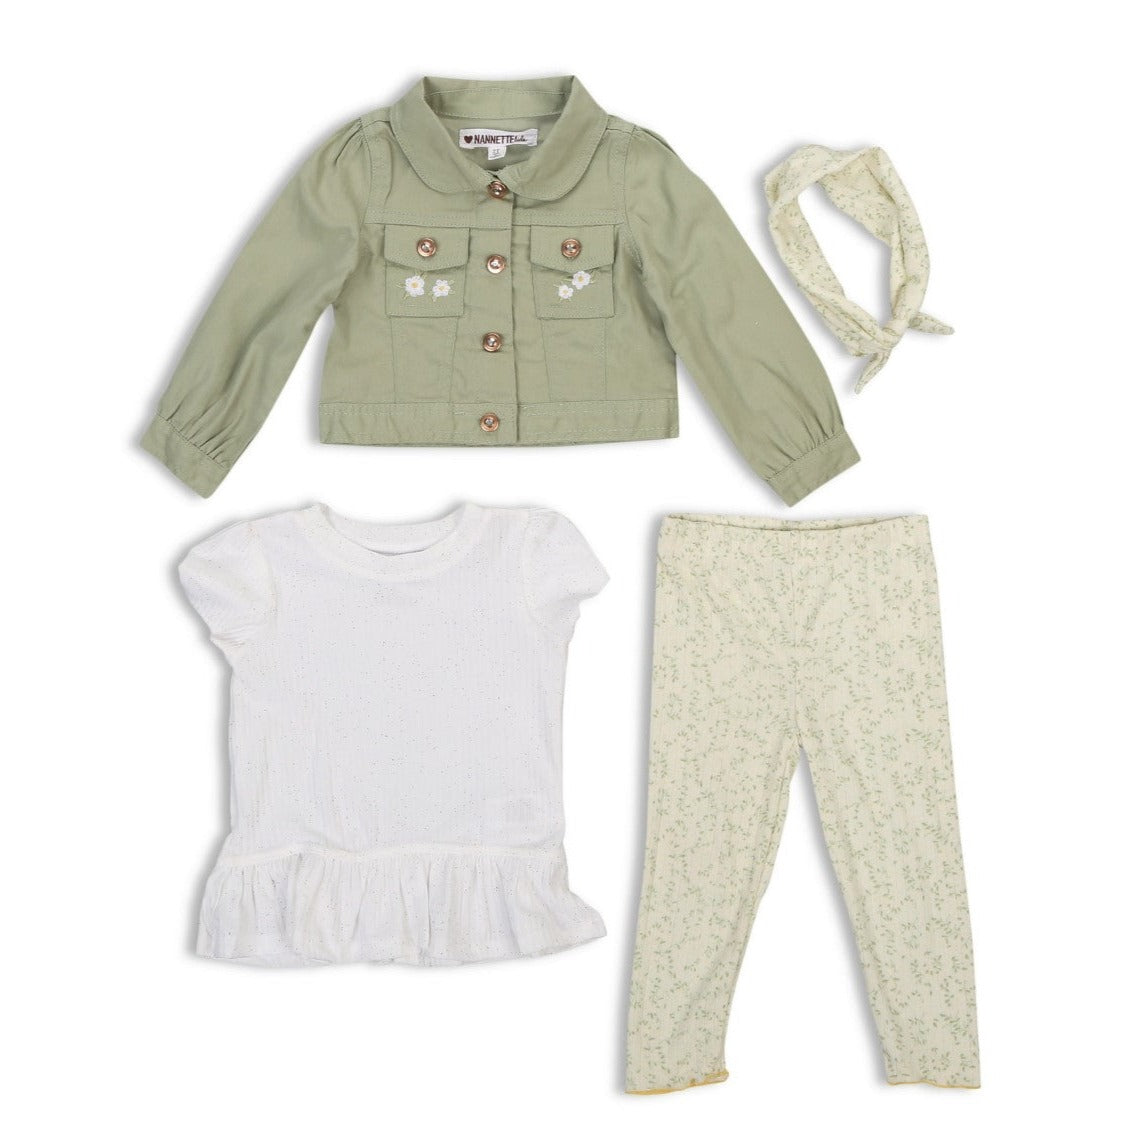 Nannette Toddler Girls 3Pc Jacket Set With Headband, Floral Pattern, Olive Green, Size 4T